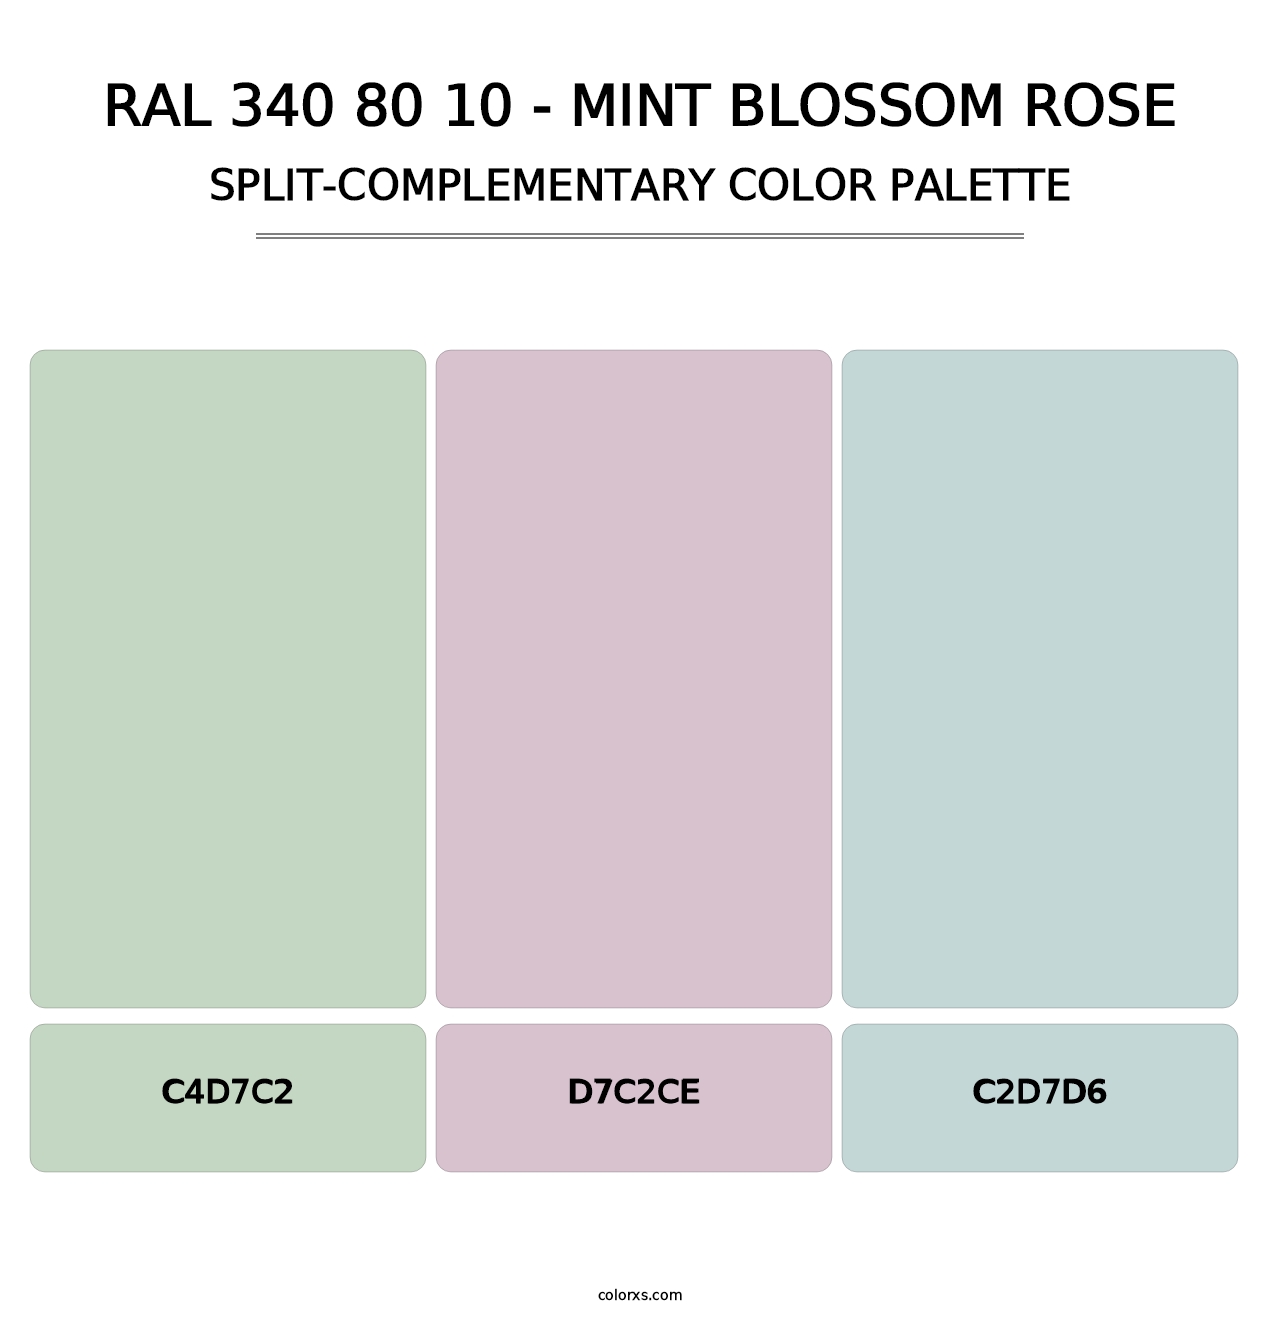 RAL 340 80 10 - Mint Blossom Rose - Split-Complementary Color Palette